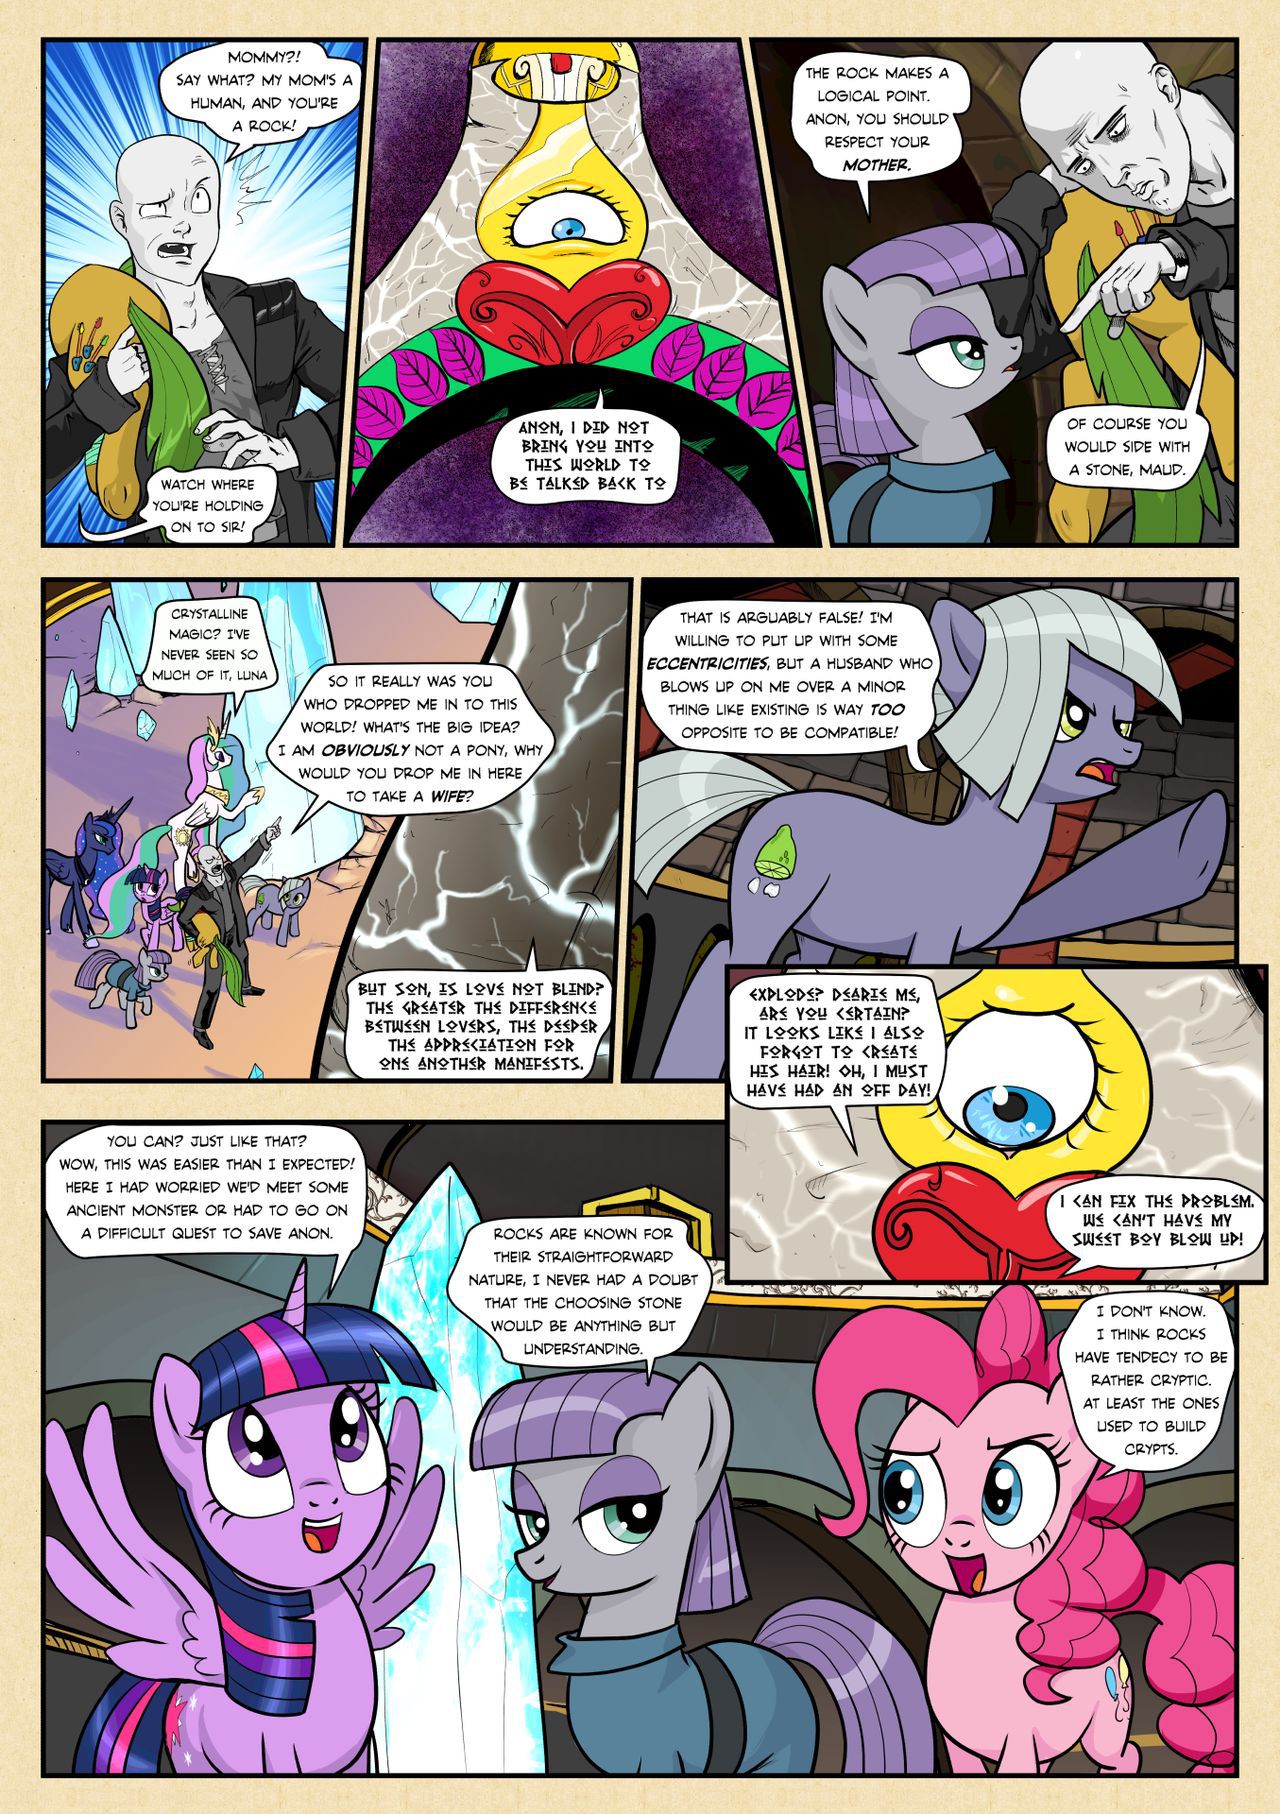 [Pencils] Anon's Pie Adventures (My Little Pony: Friendship is Magic) [In-Progress] 236